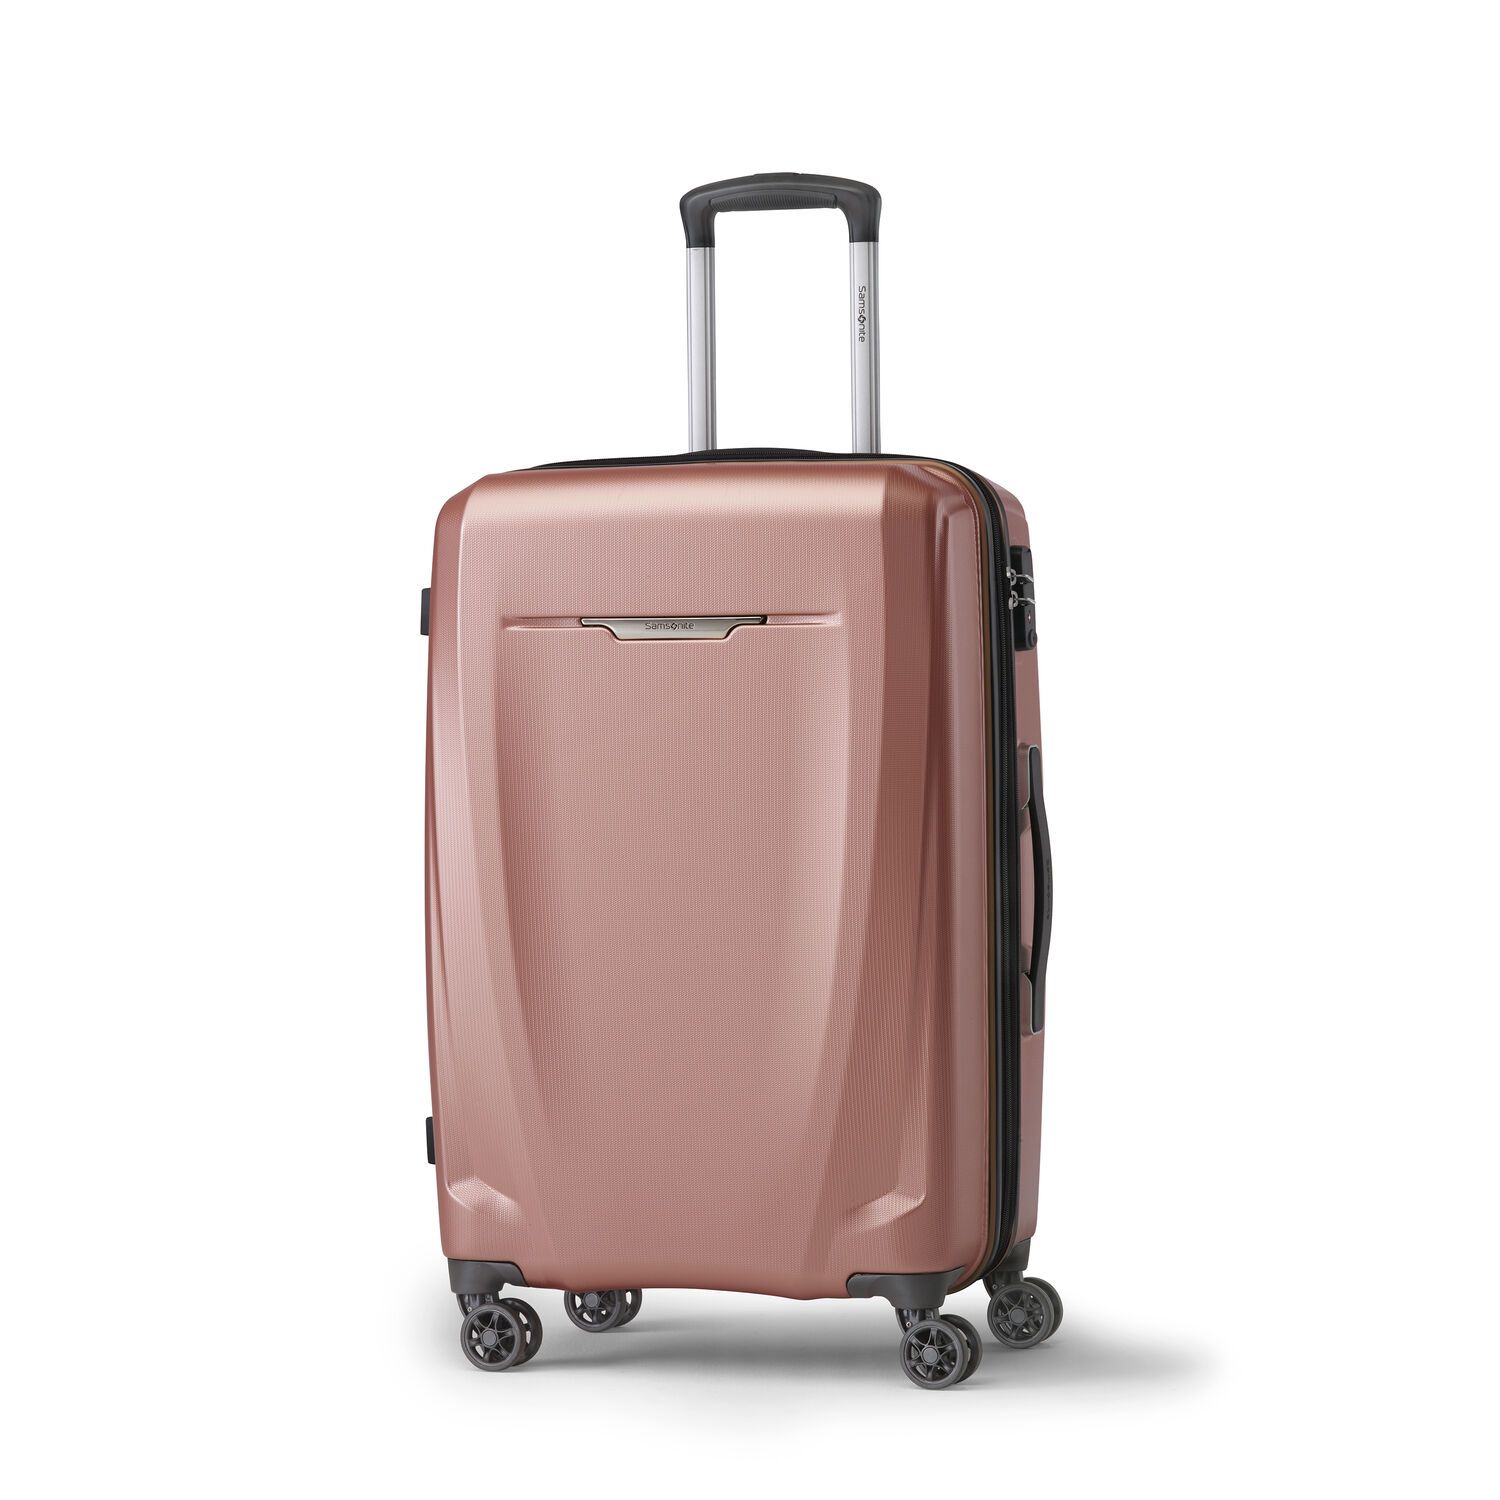 Samsonite Pursuit DLX Plus Spinner Medium Expandable Luggage - Limited Edition: Rose Gold